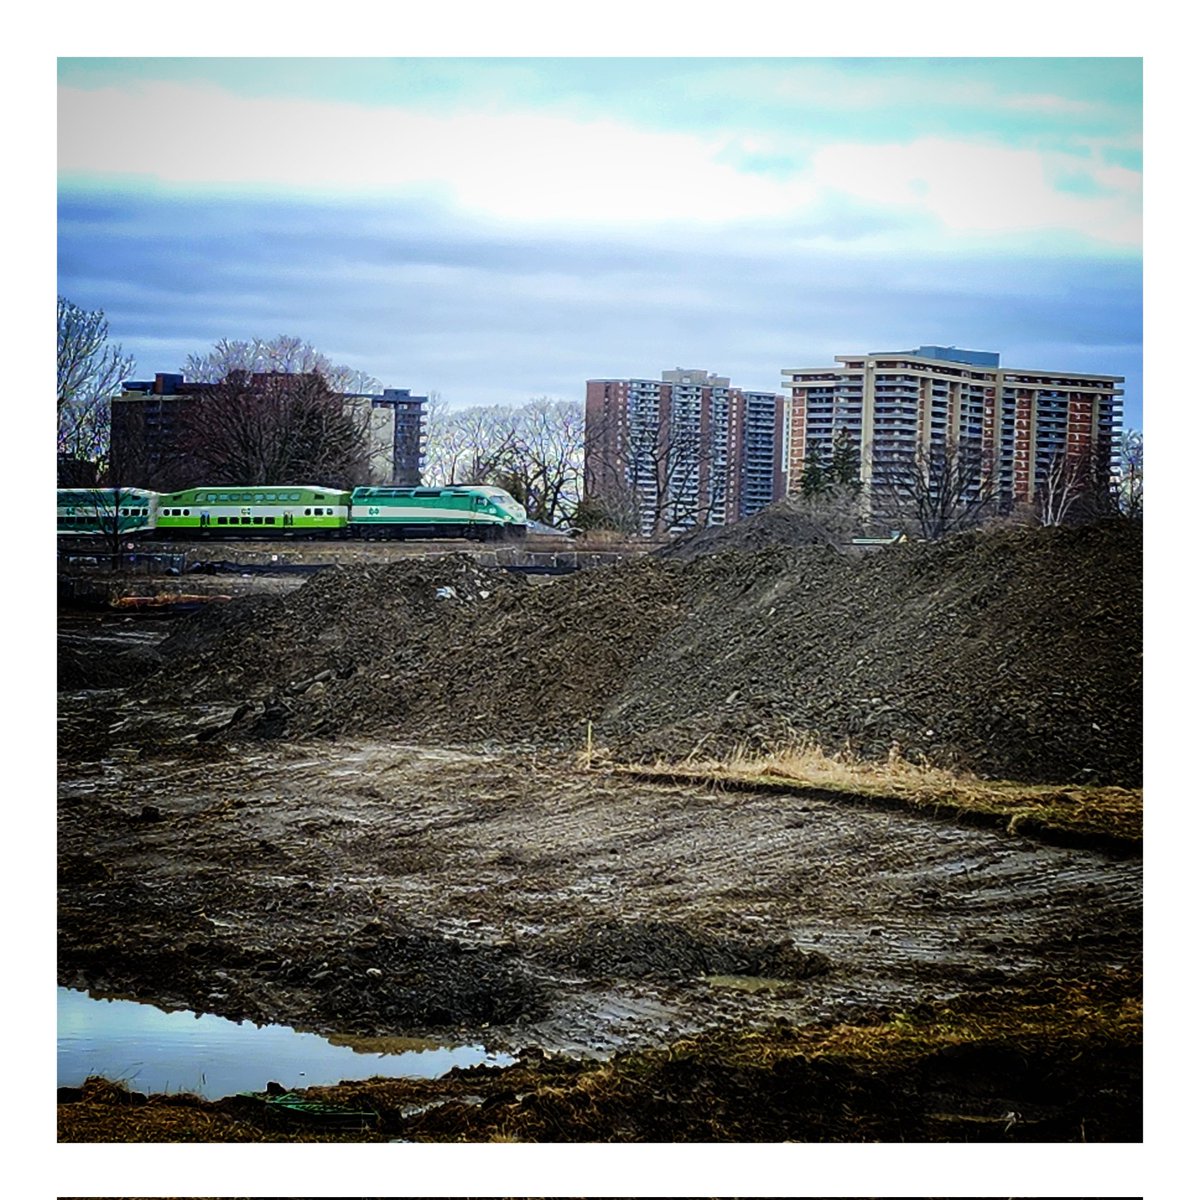 GO East. #GOtransit #GOtrain #LakeshoreEast #Toronto #Scarborough #RailPhotography #Photography